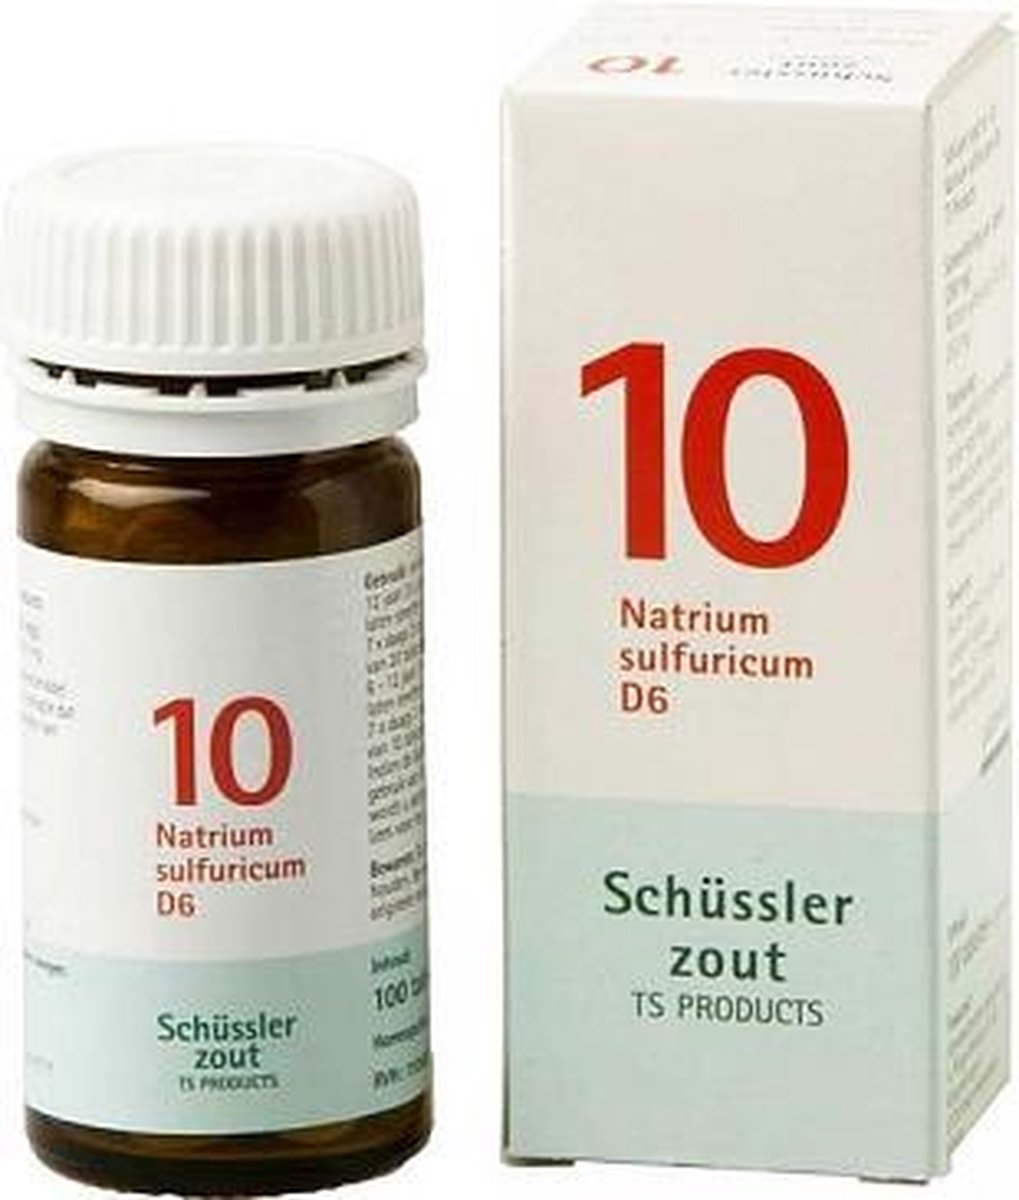 Schussler zout pfluger nr 10 Natrium Sulfuricum D6 100 Tabletten Glutenvrij